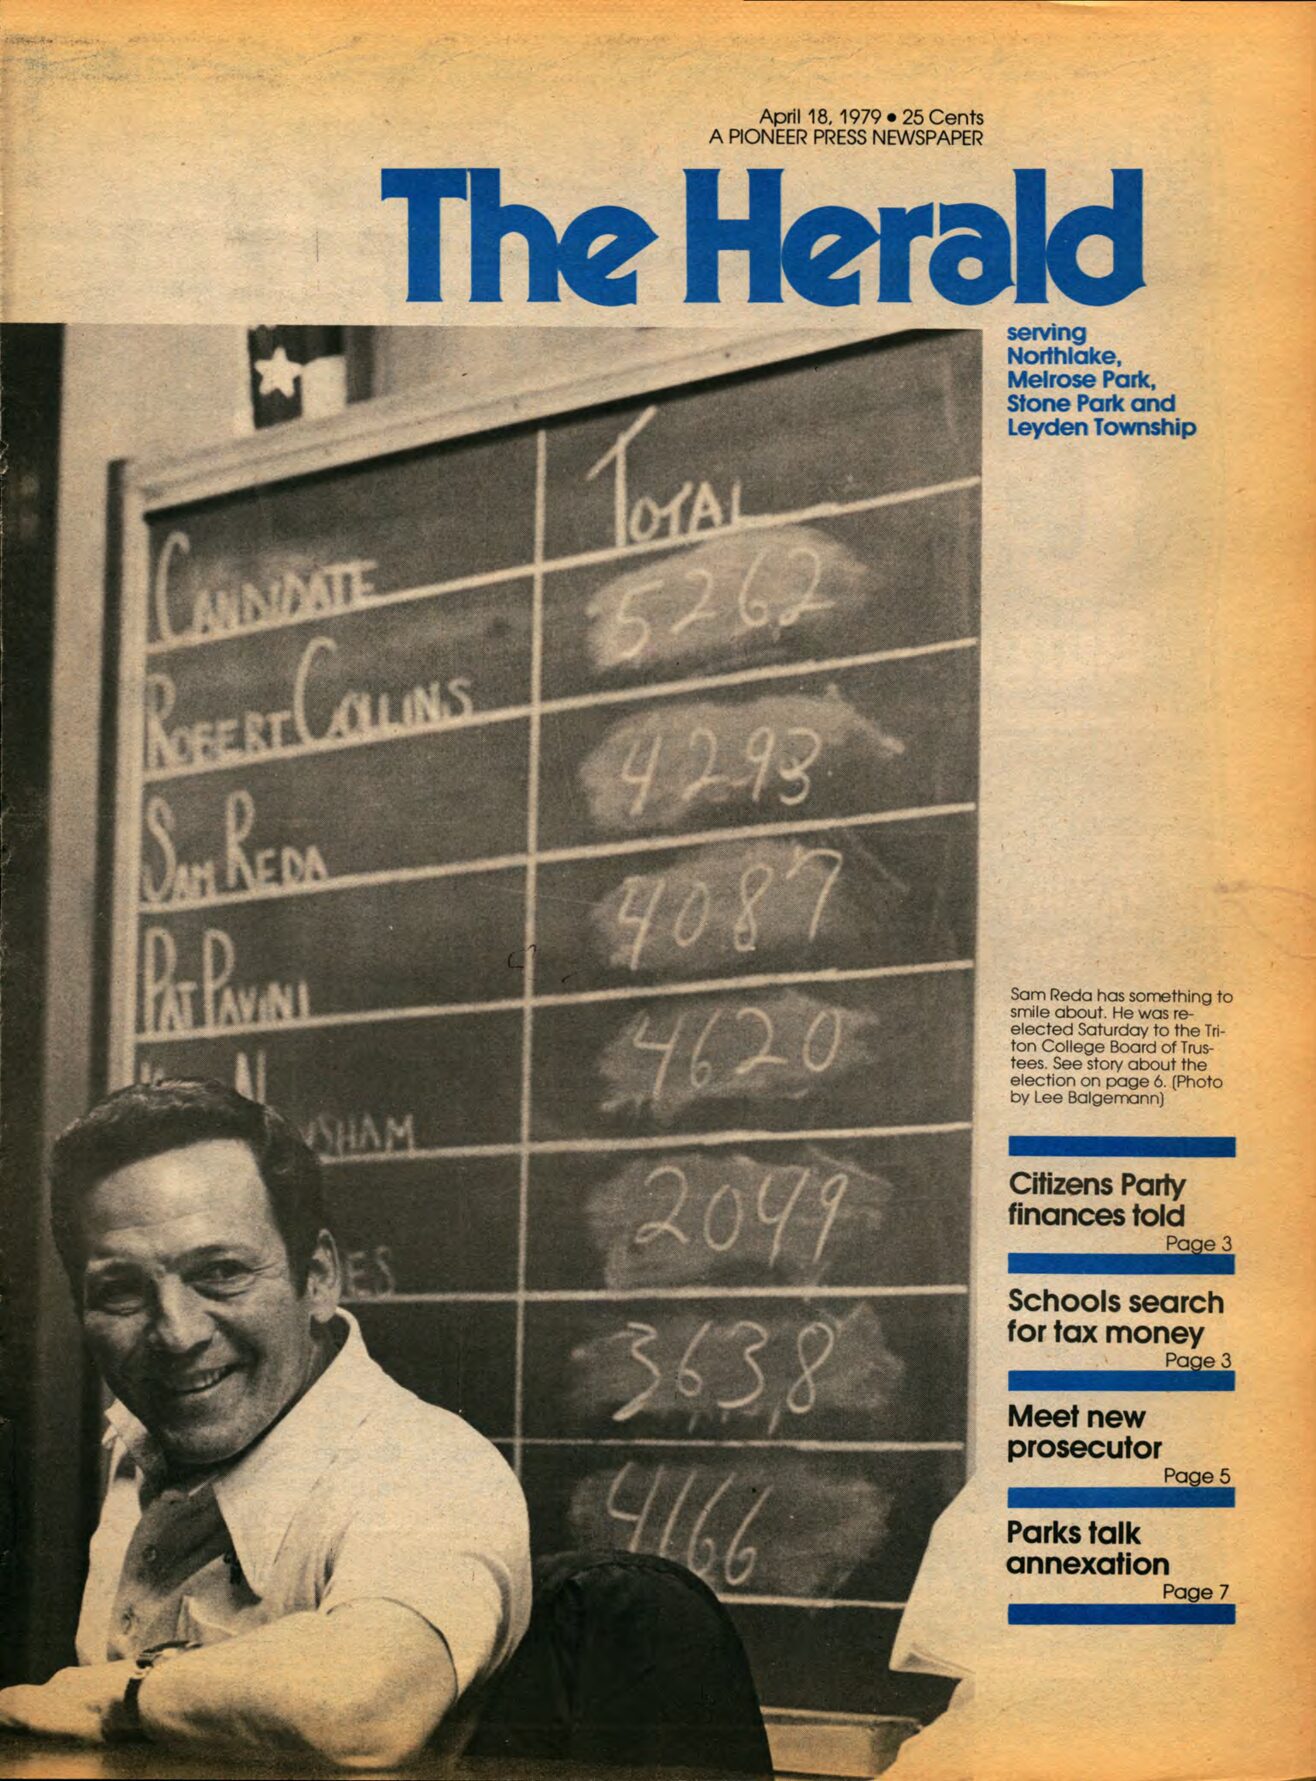 The Herald – 19790418